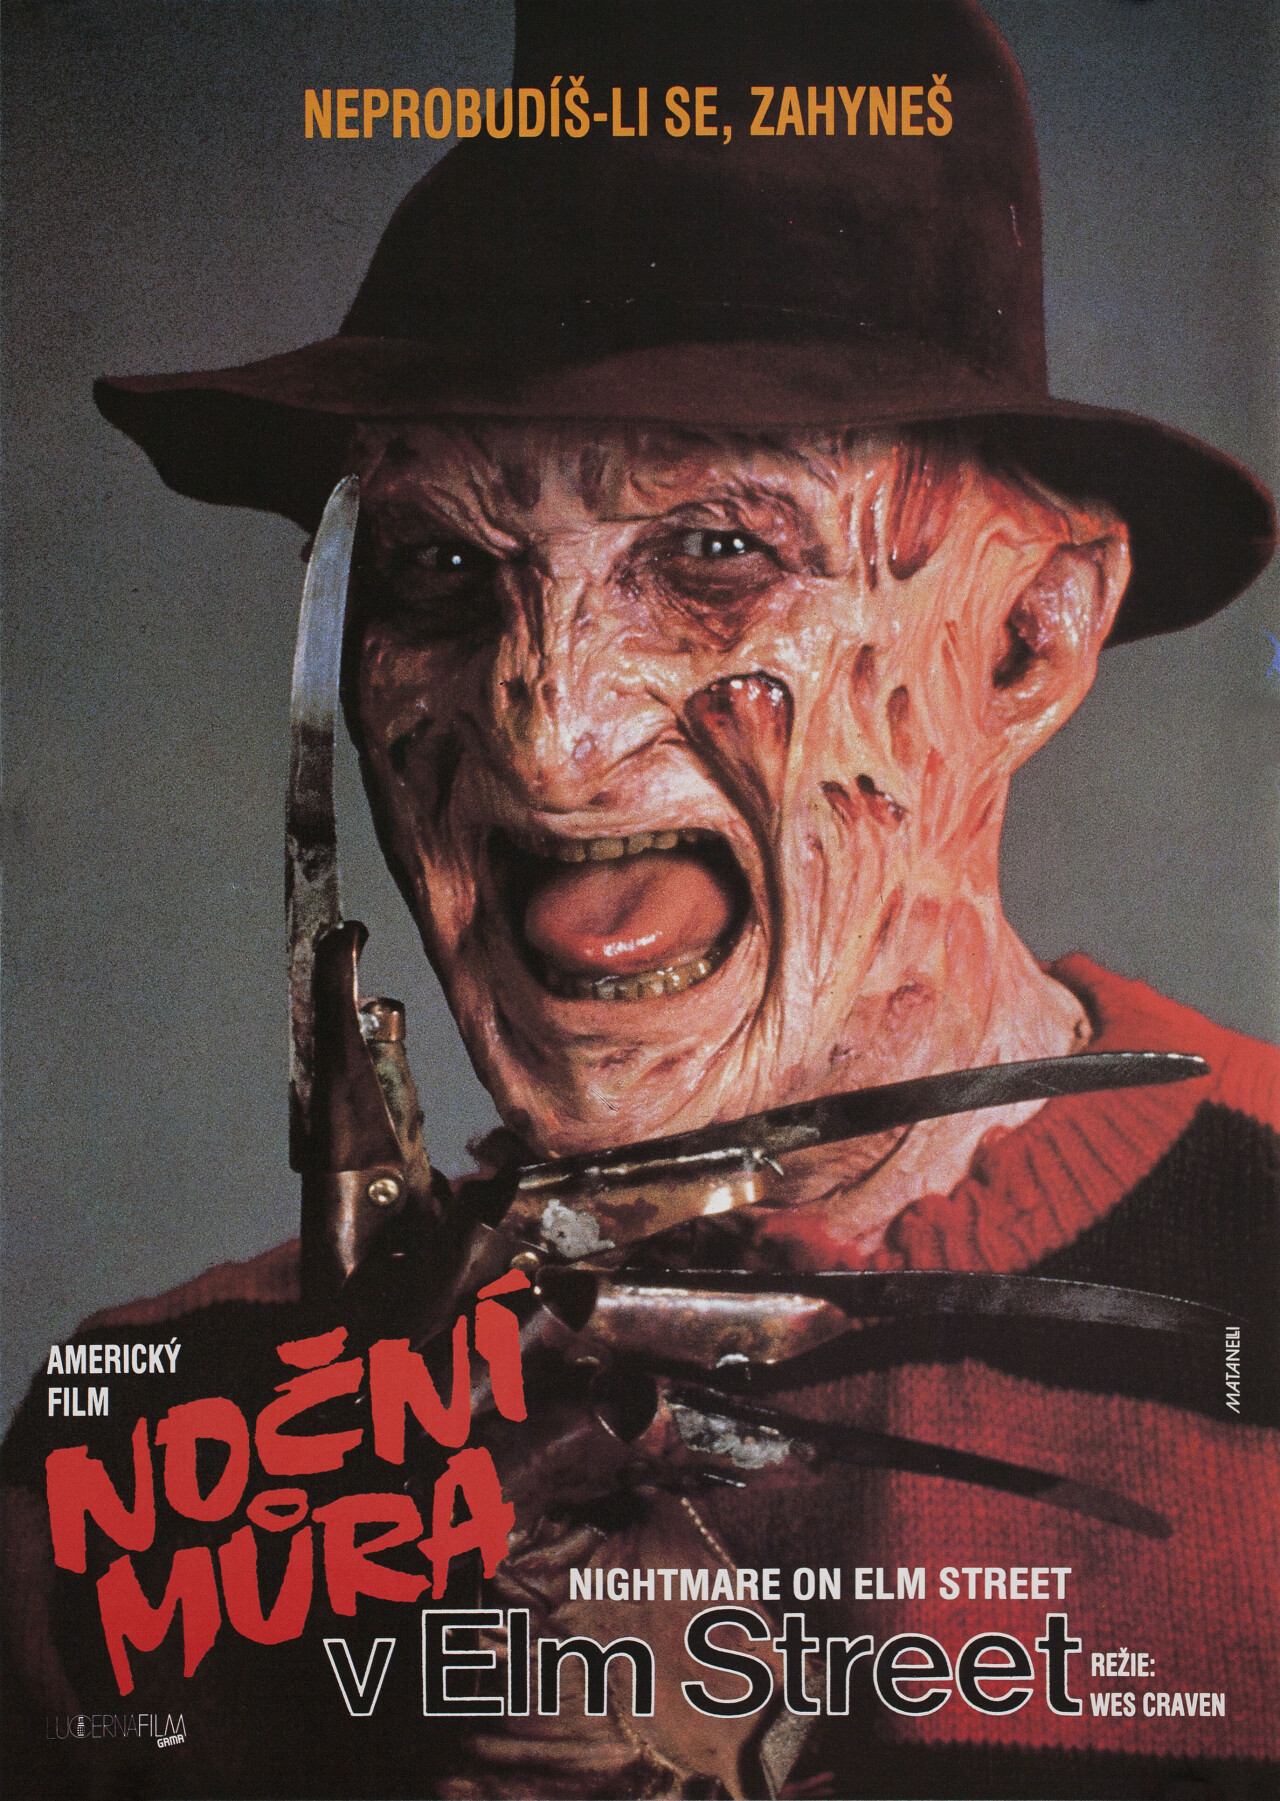 Кошмар на улице Вязов (A Nightmare on Elm Street, 1984), режиссёр Уэс Крэйвен, чехословацкий постер к фильму (ужасы, 1984 год)